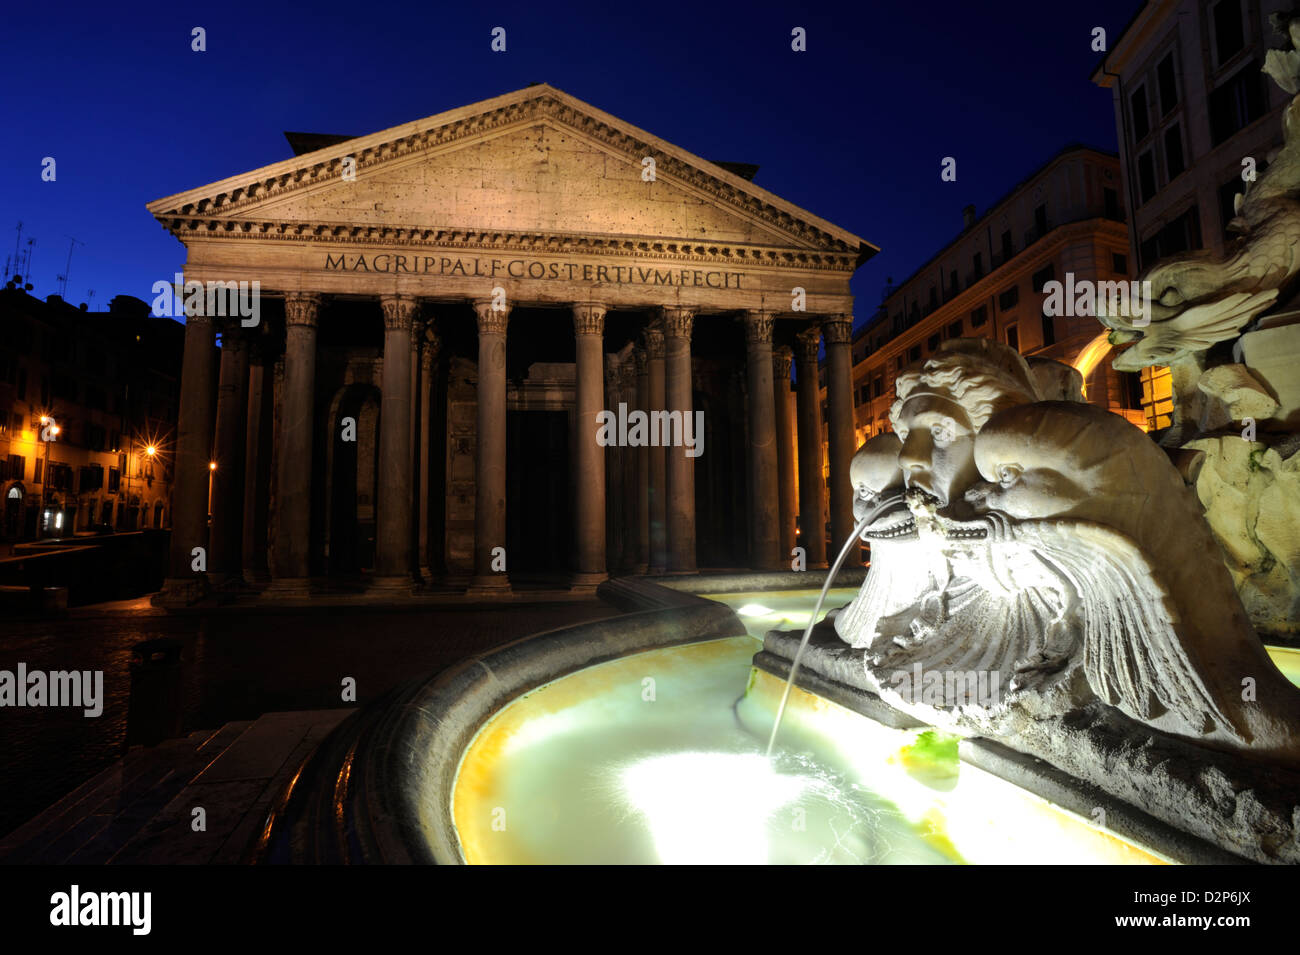 Italy, Rome, Piazza della Rotonda, fountain and Pantheon at night Stock Photo